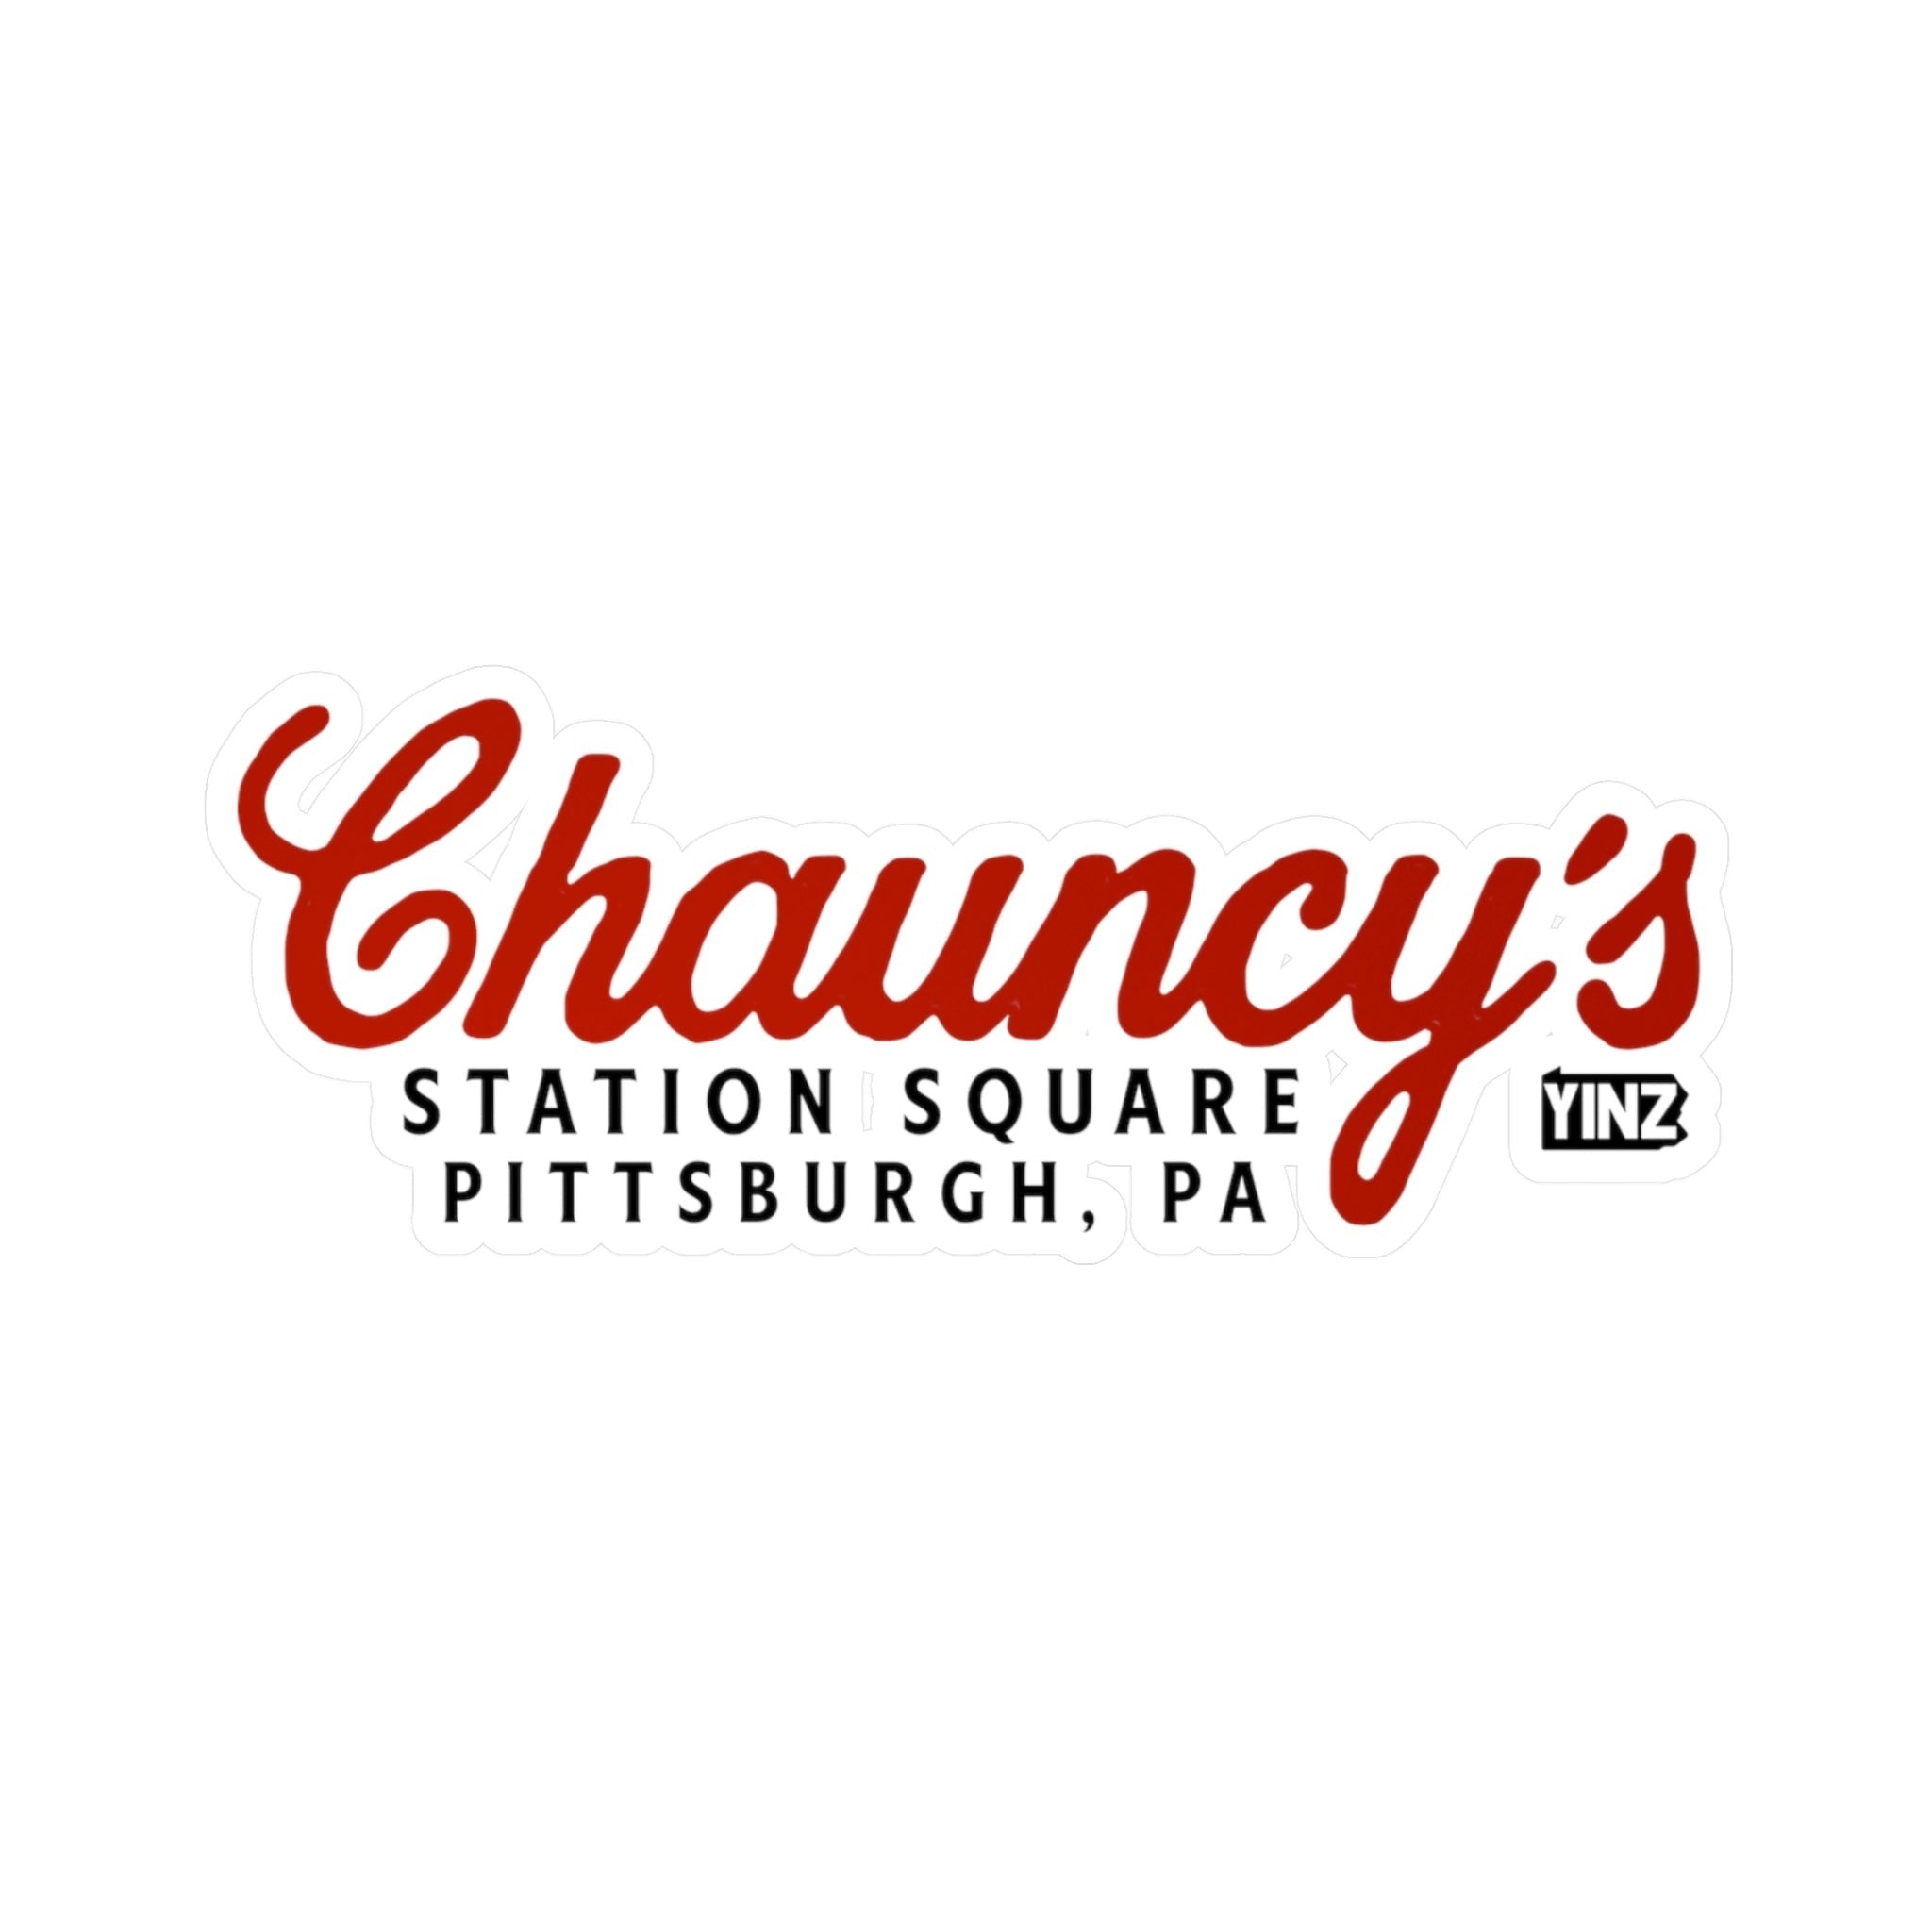 Chauncy's Station Square - Pittsburgh - Kiss-Cut Vinyl Decals - Yinzylvania